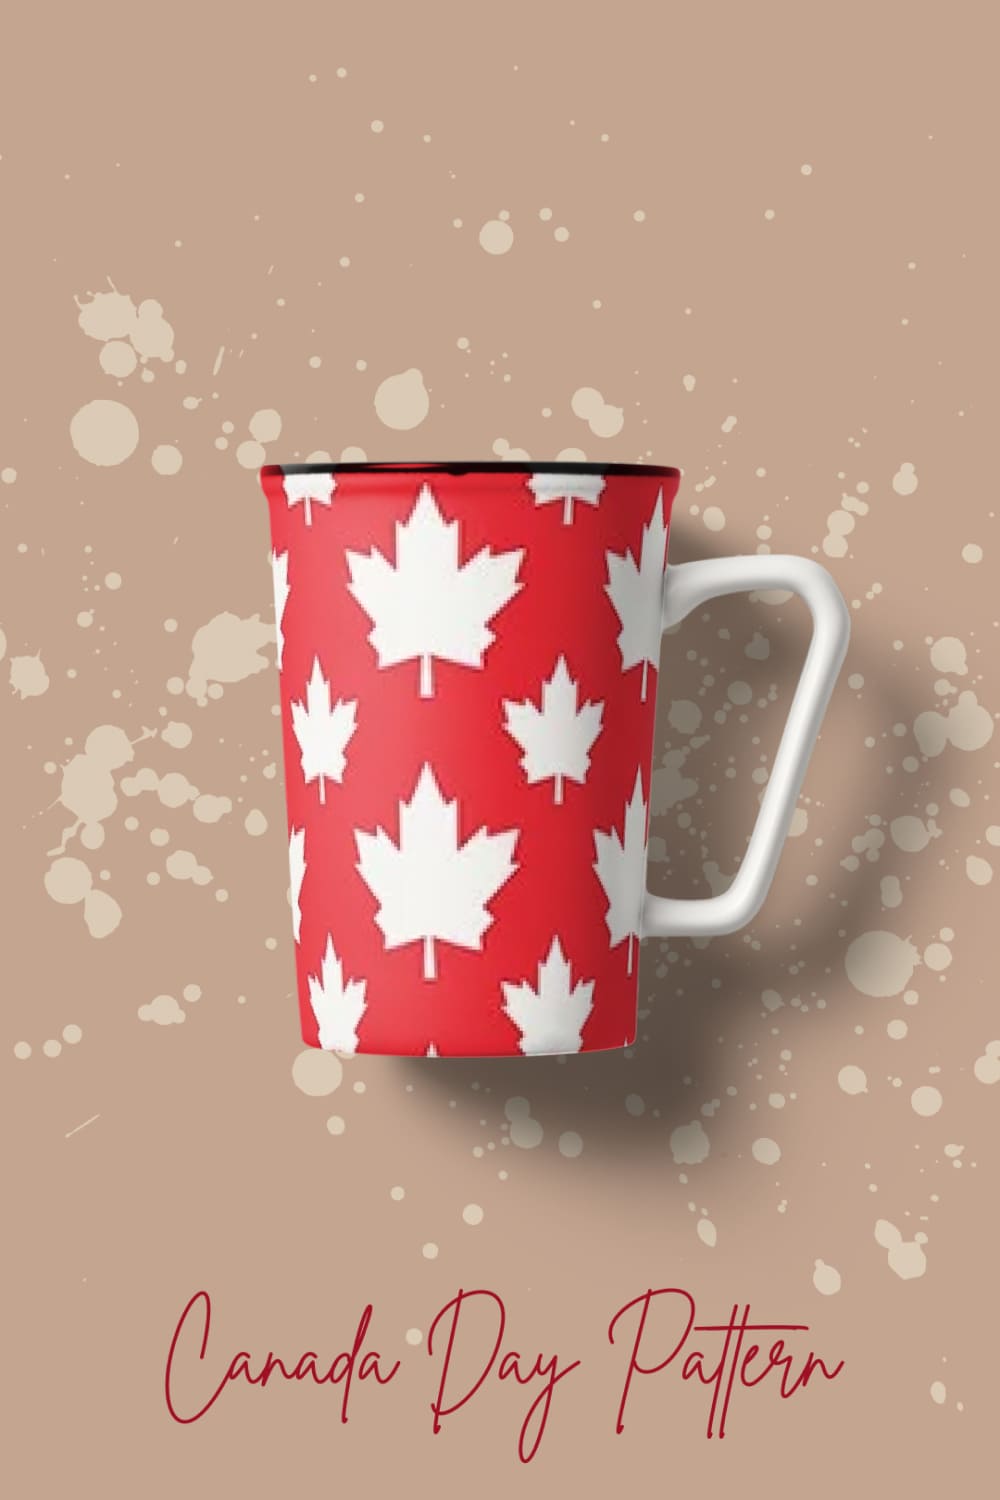 Canada Day Pattern - Pinterest.